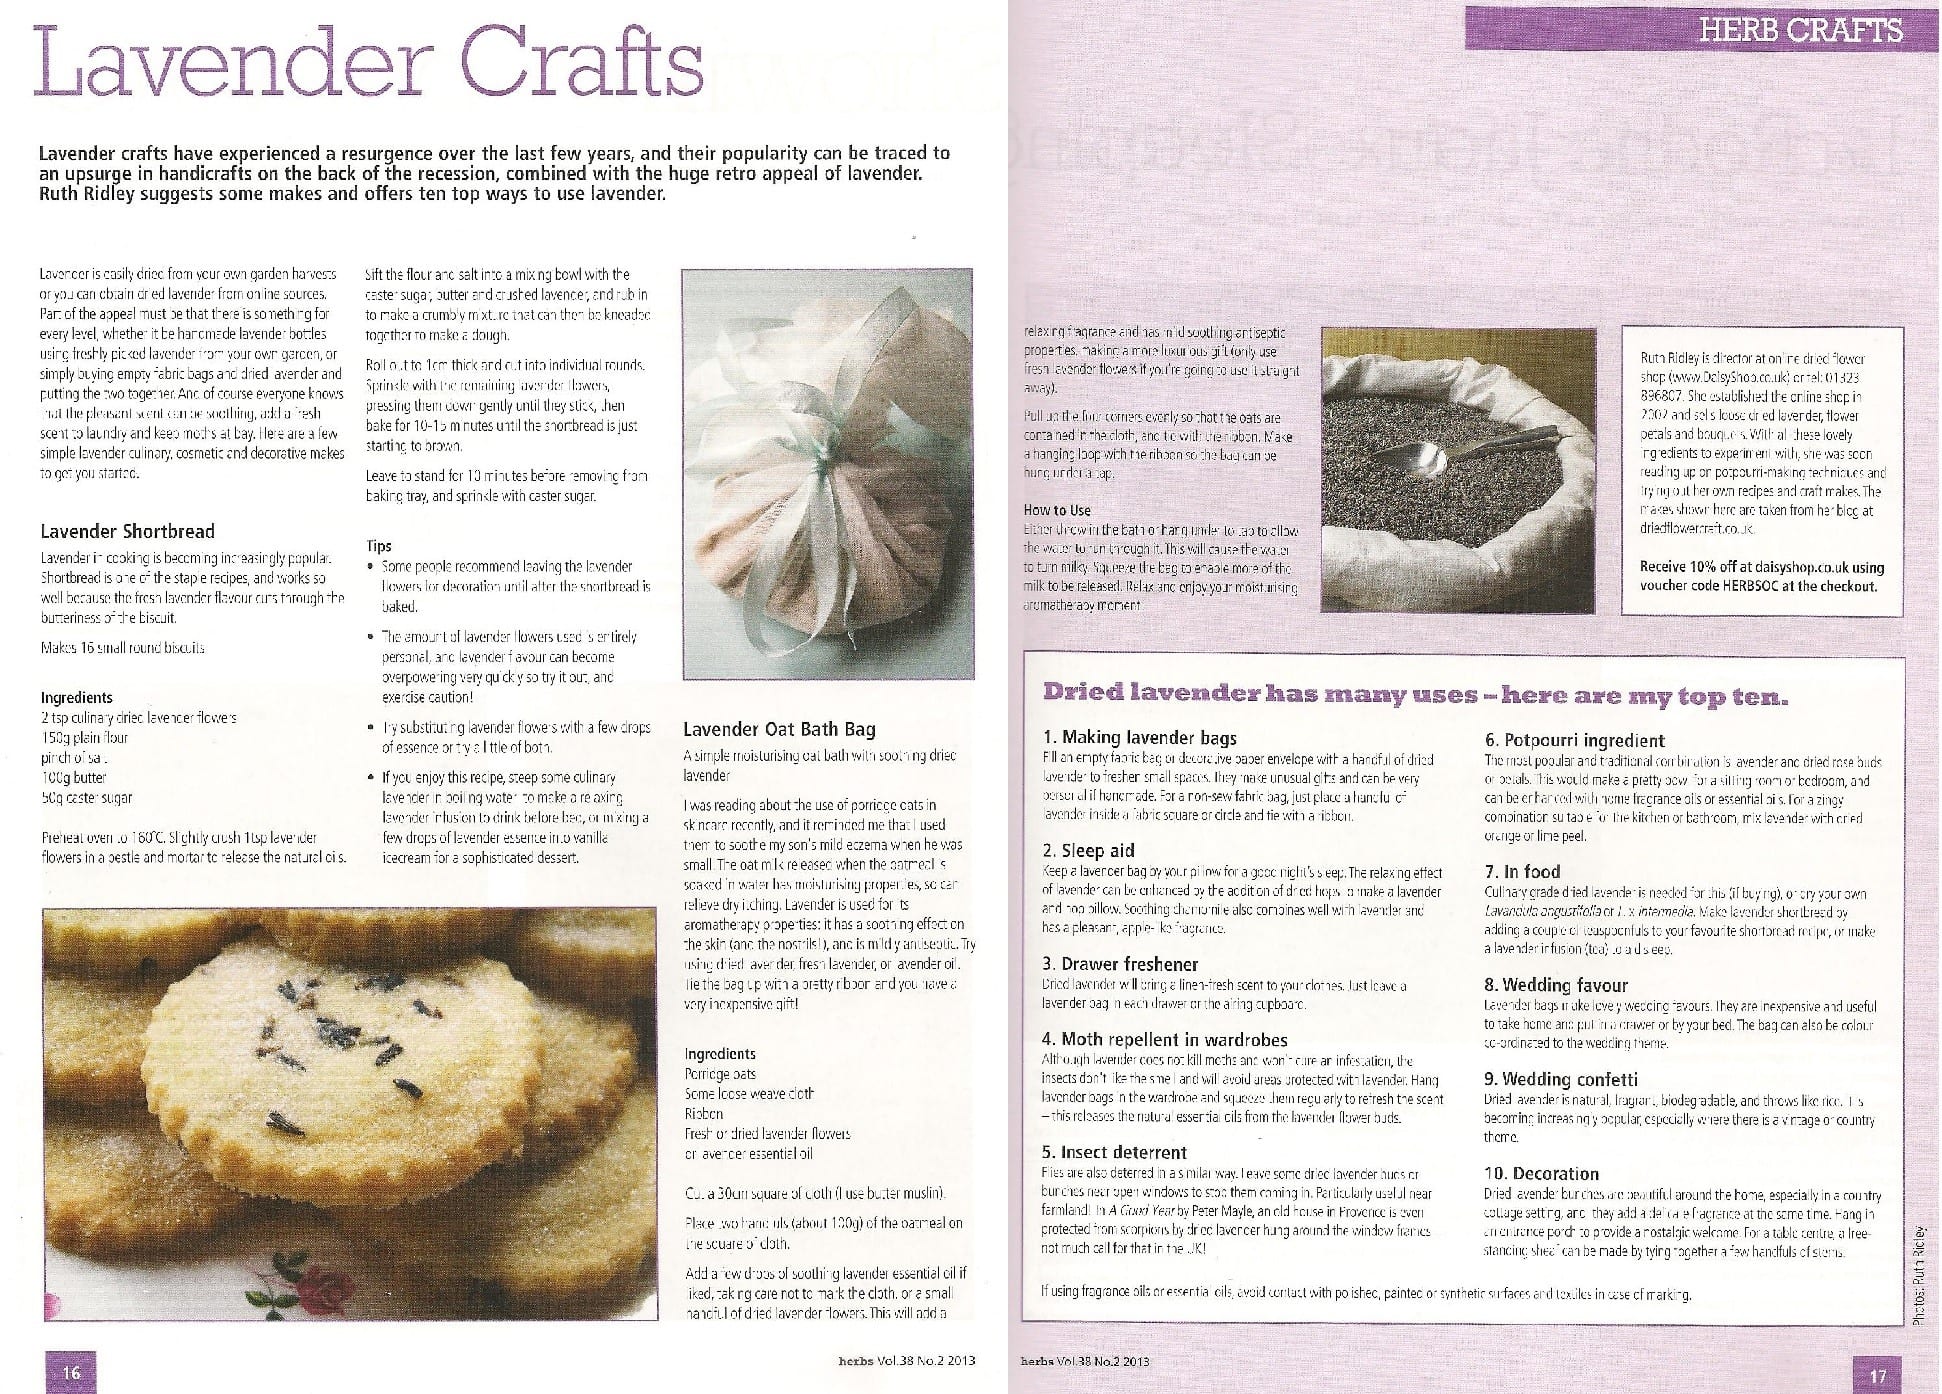 lavender craft herbs magazine article